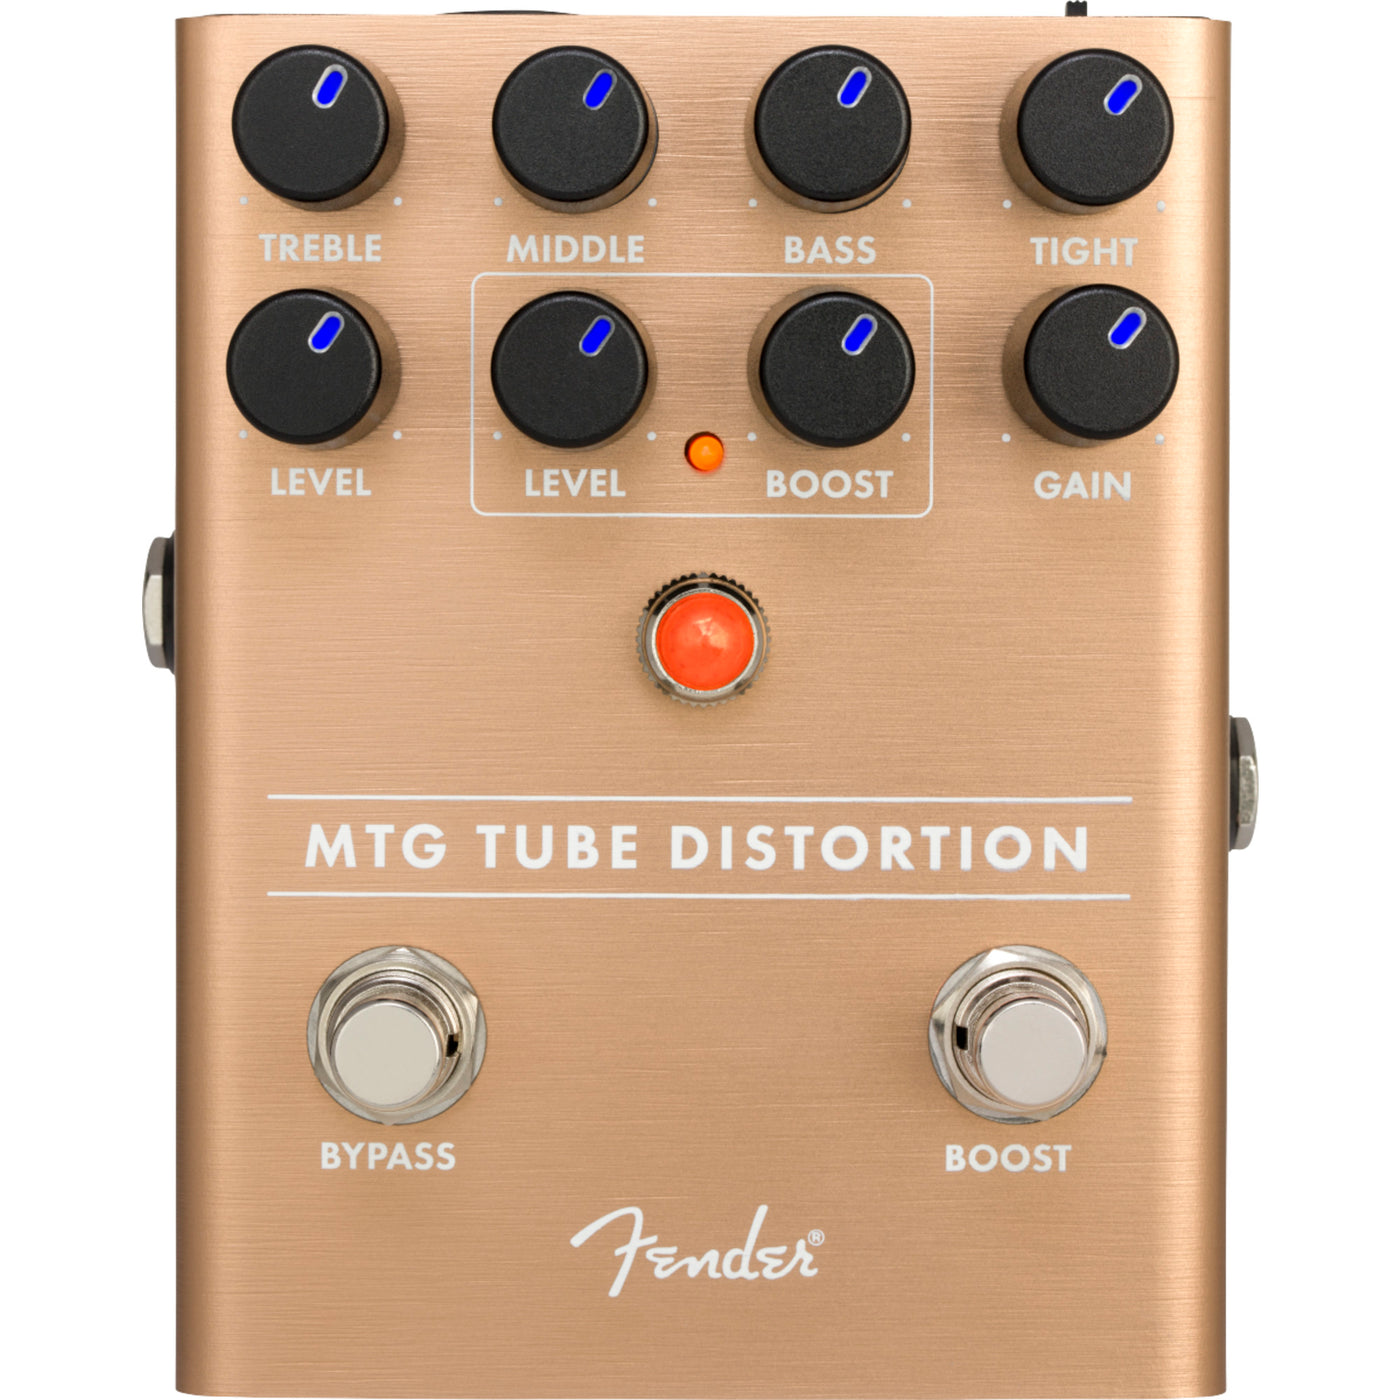 Fender MTG Tube Distortion Pedal (0234539000)